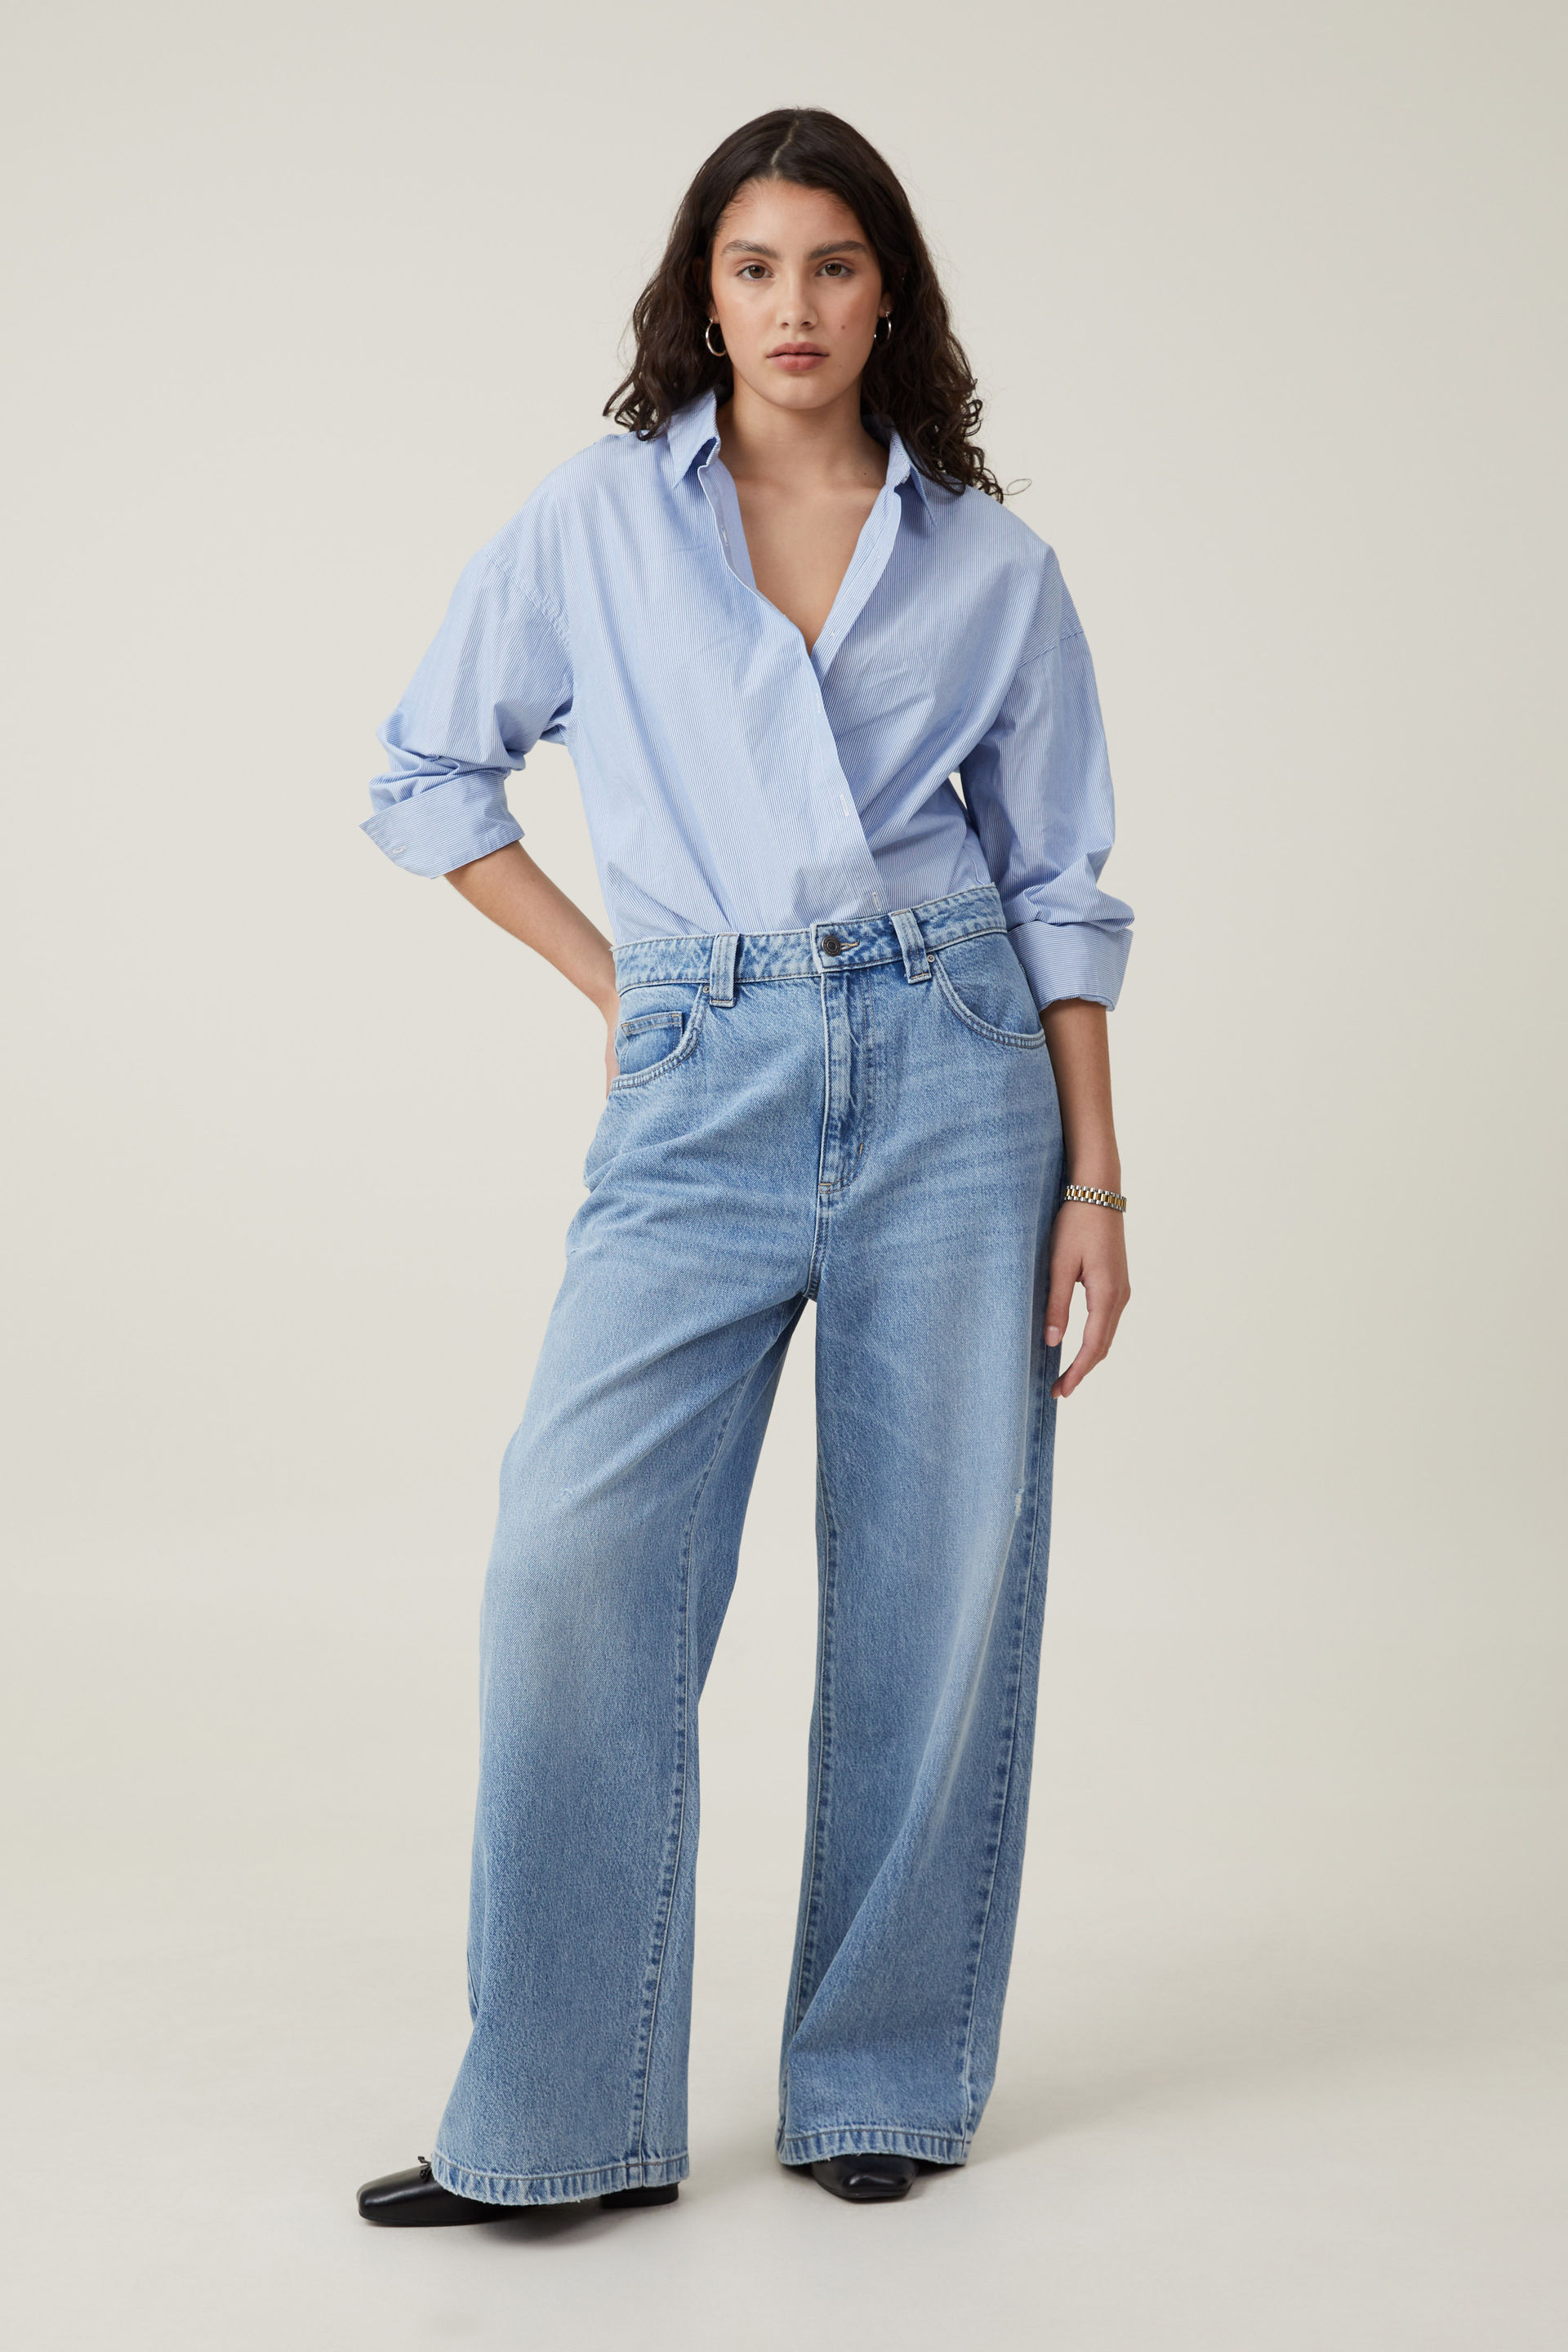 Cotton On Women - Super Baggy Jean - Breeze blue worn